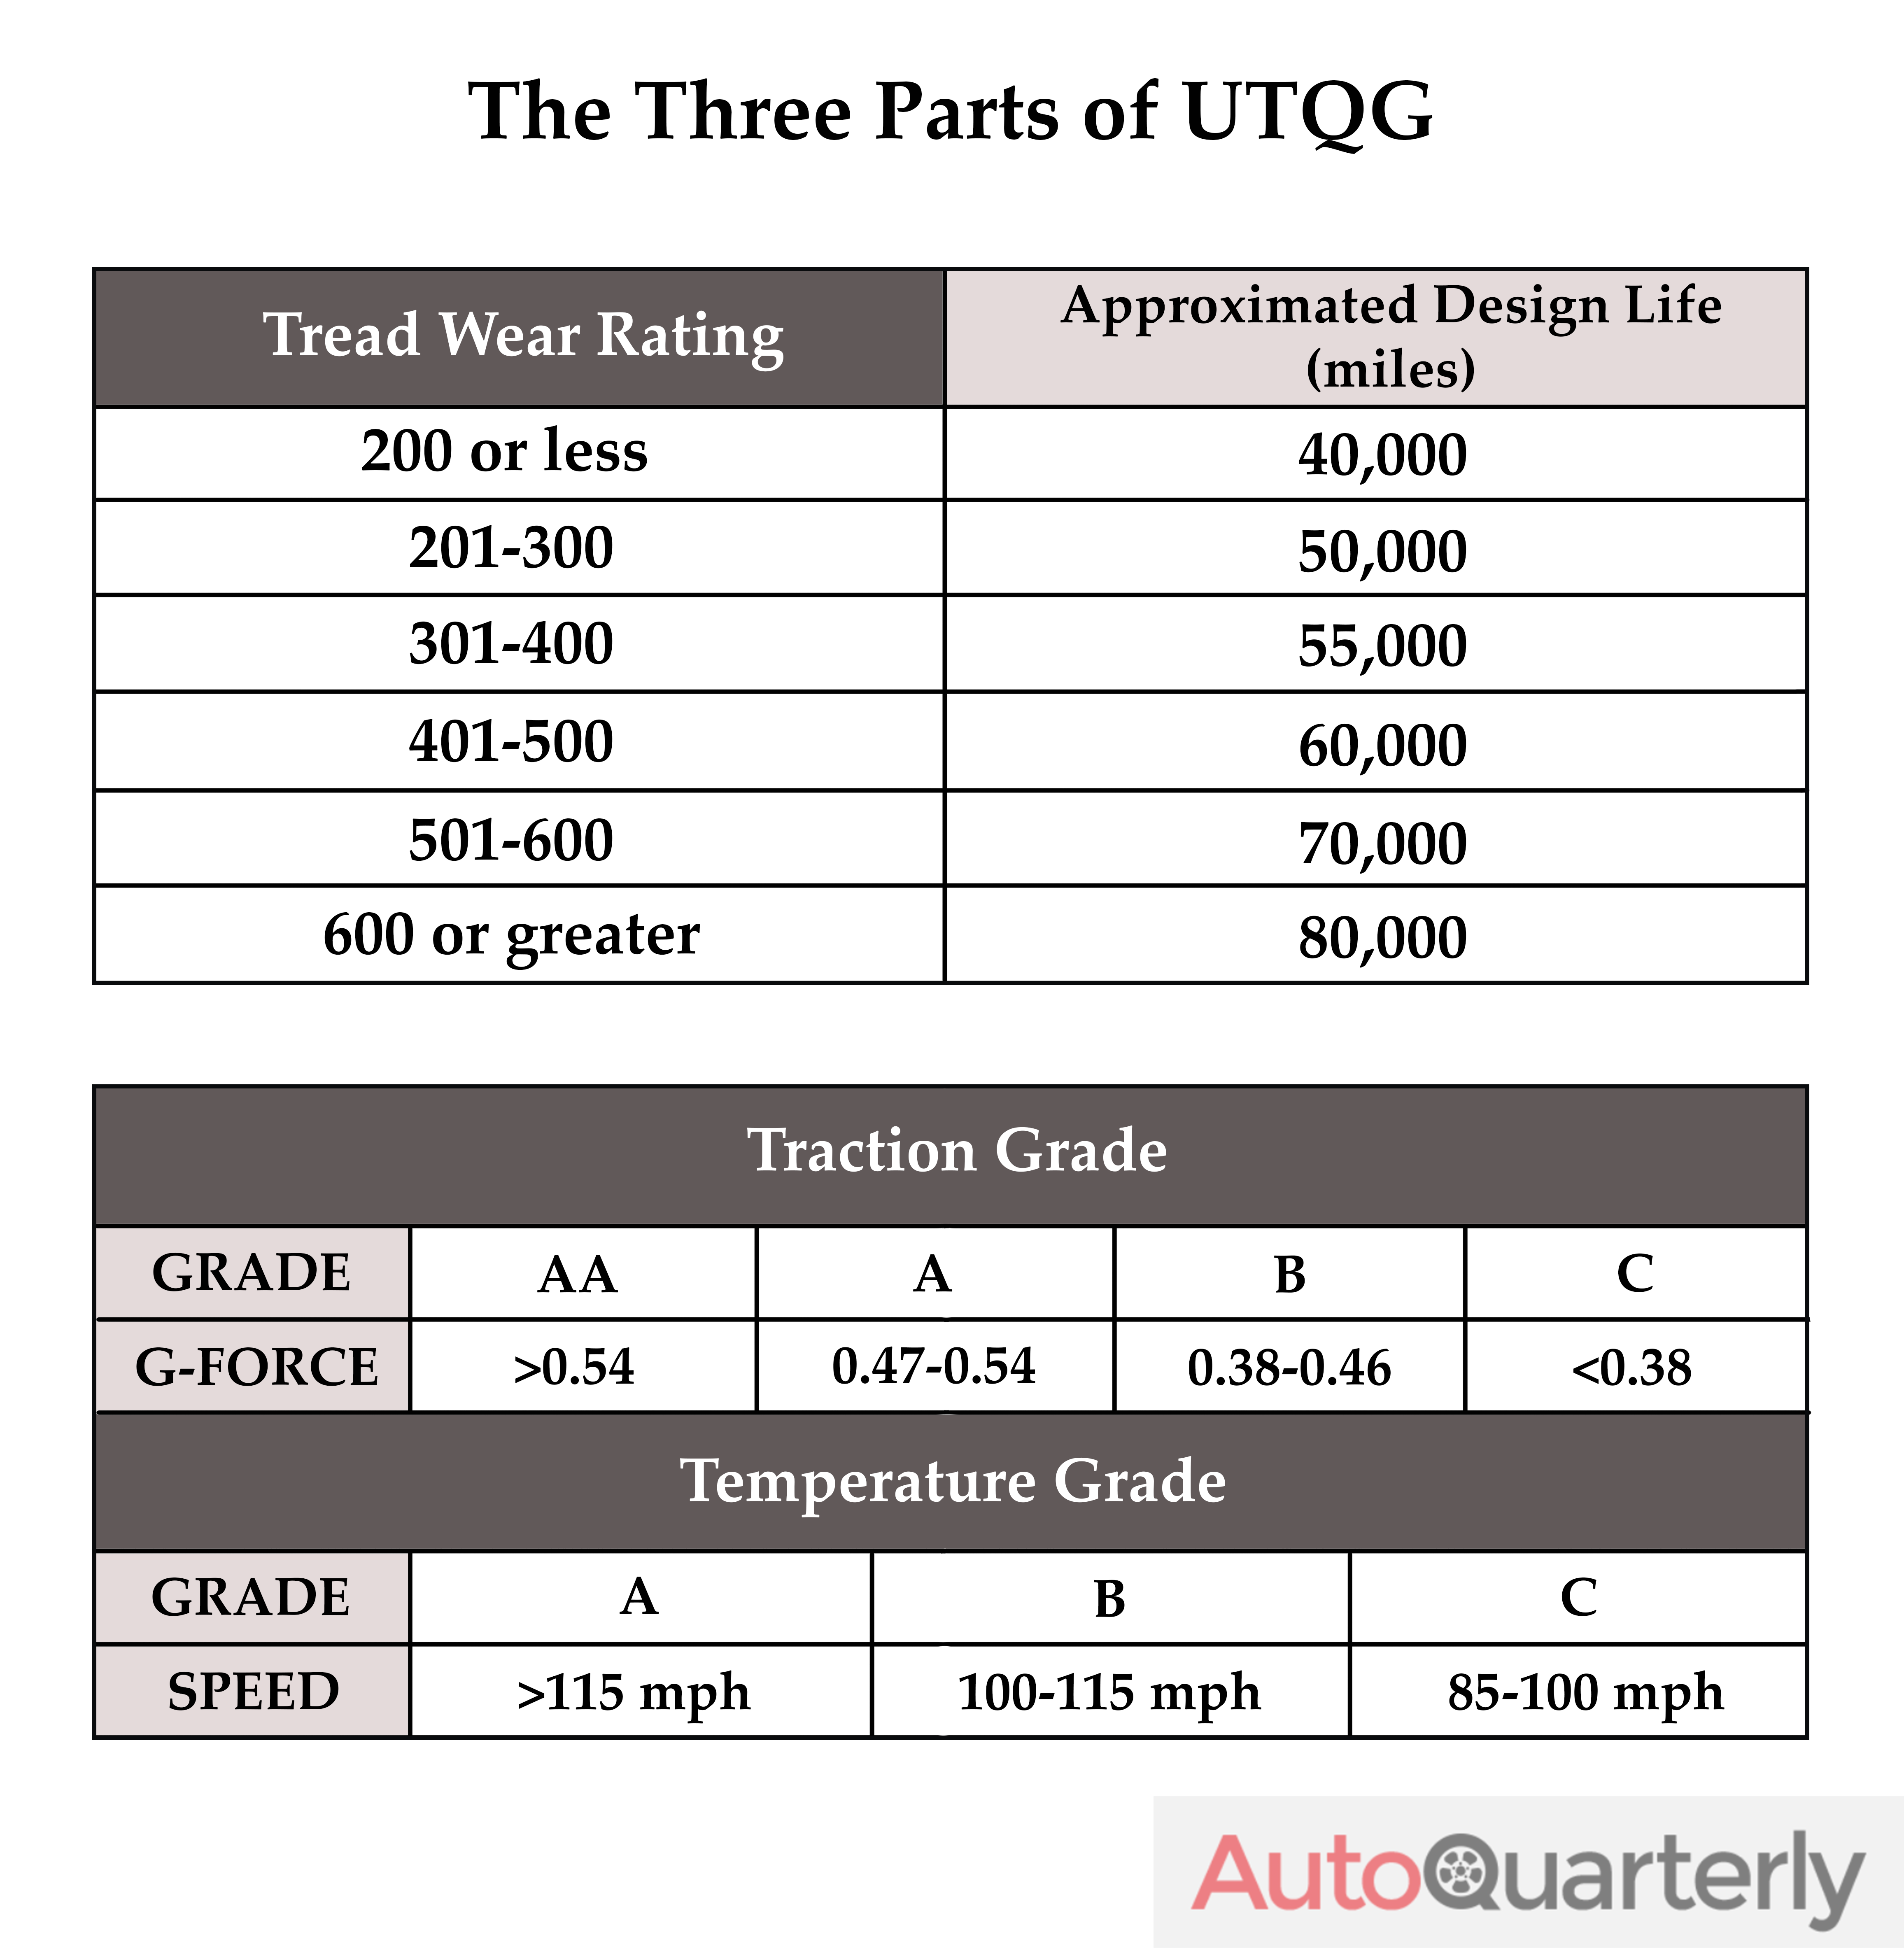 All About UTQG Uniform Tire Quality Grading Auto Quarterly